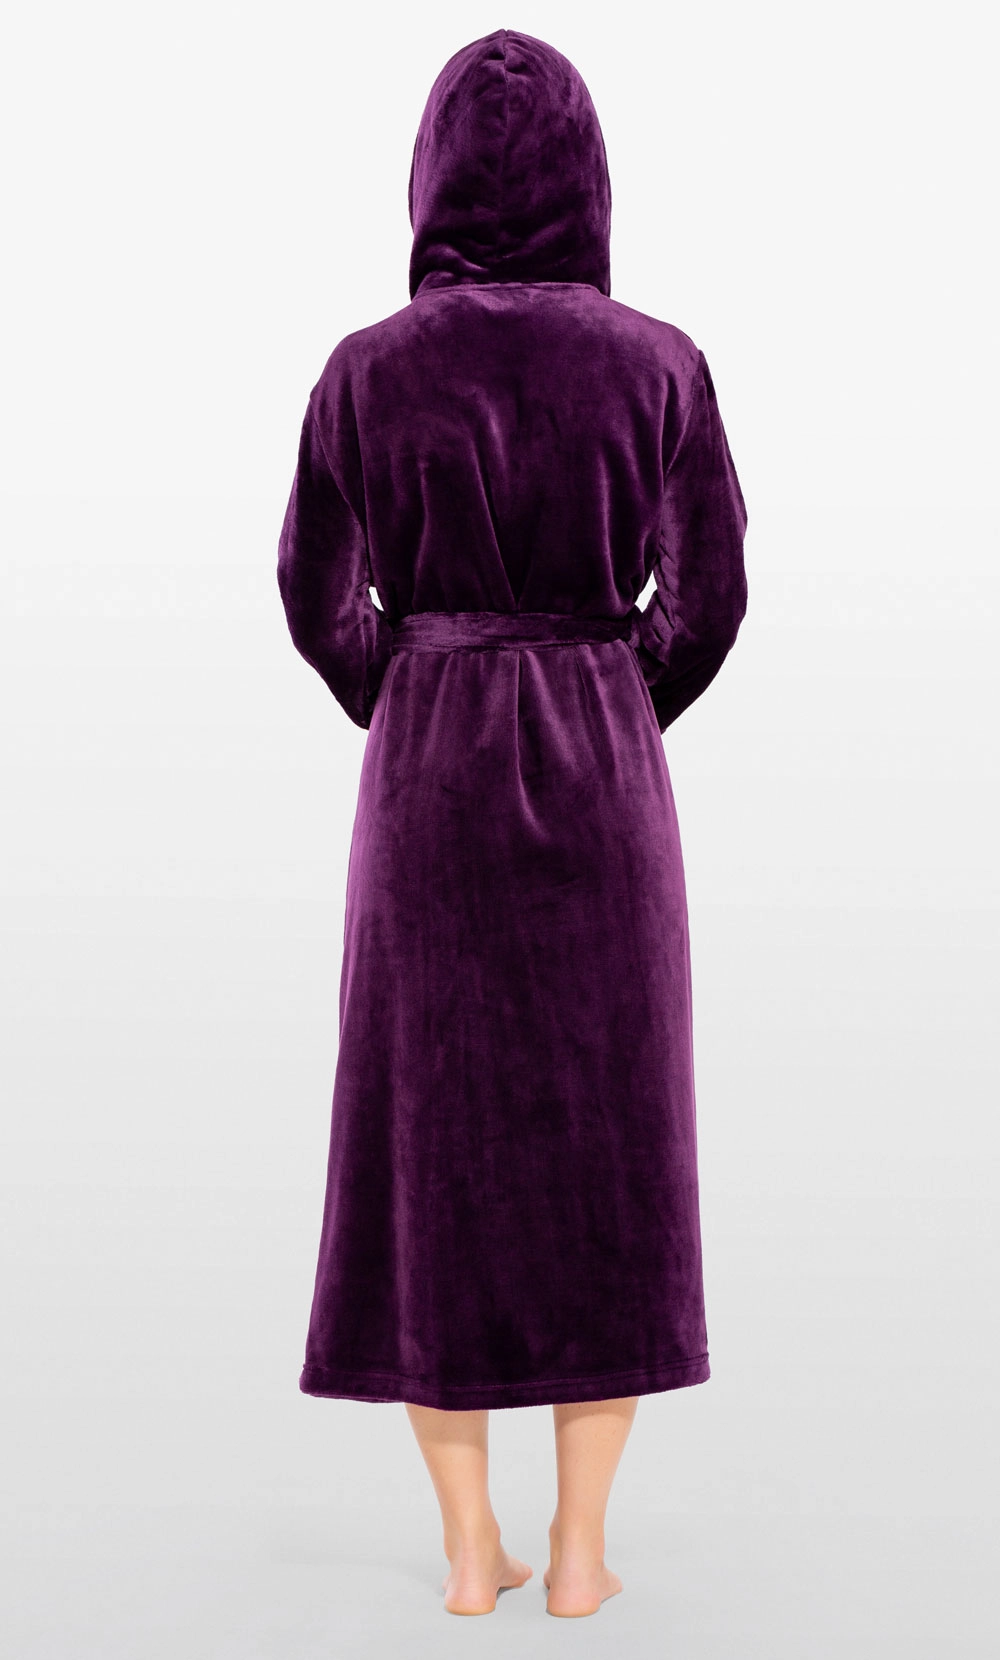 ADR Women's Classic Plush Robe, Chevron Textured Short Hooded Bathrobe  Purple Large